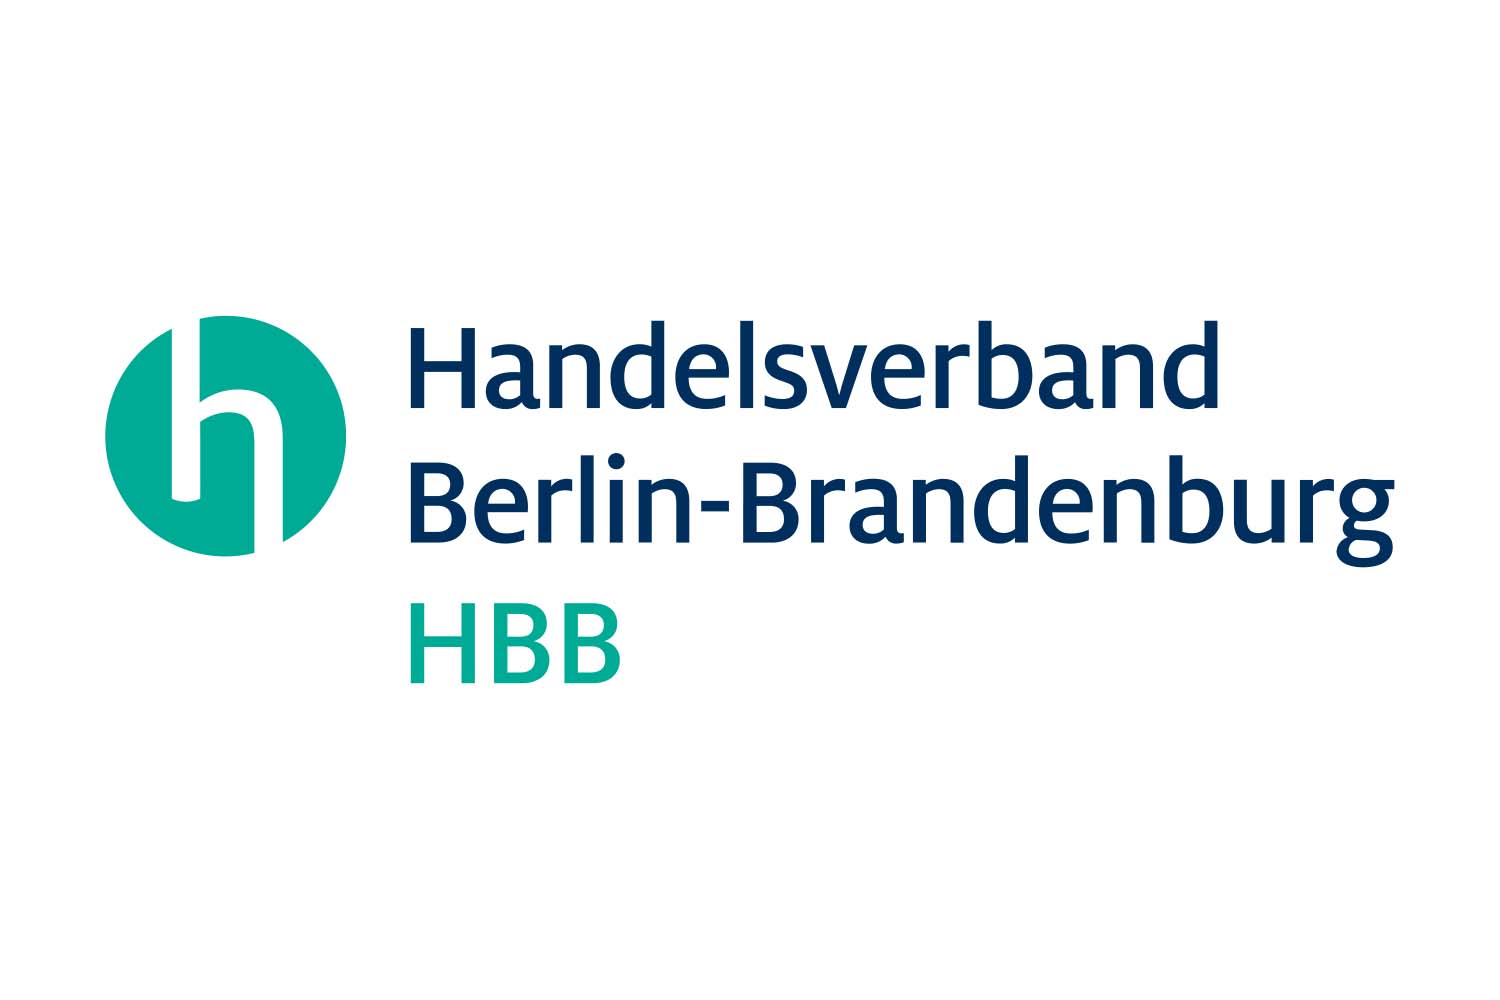 Handelsverband Berlin-Brandenburg HBB